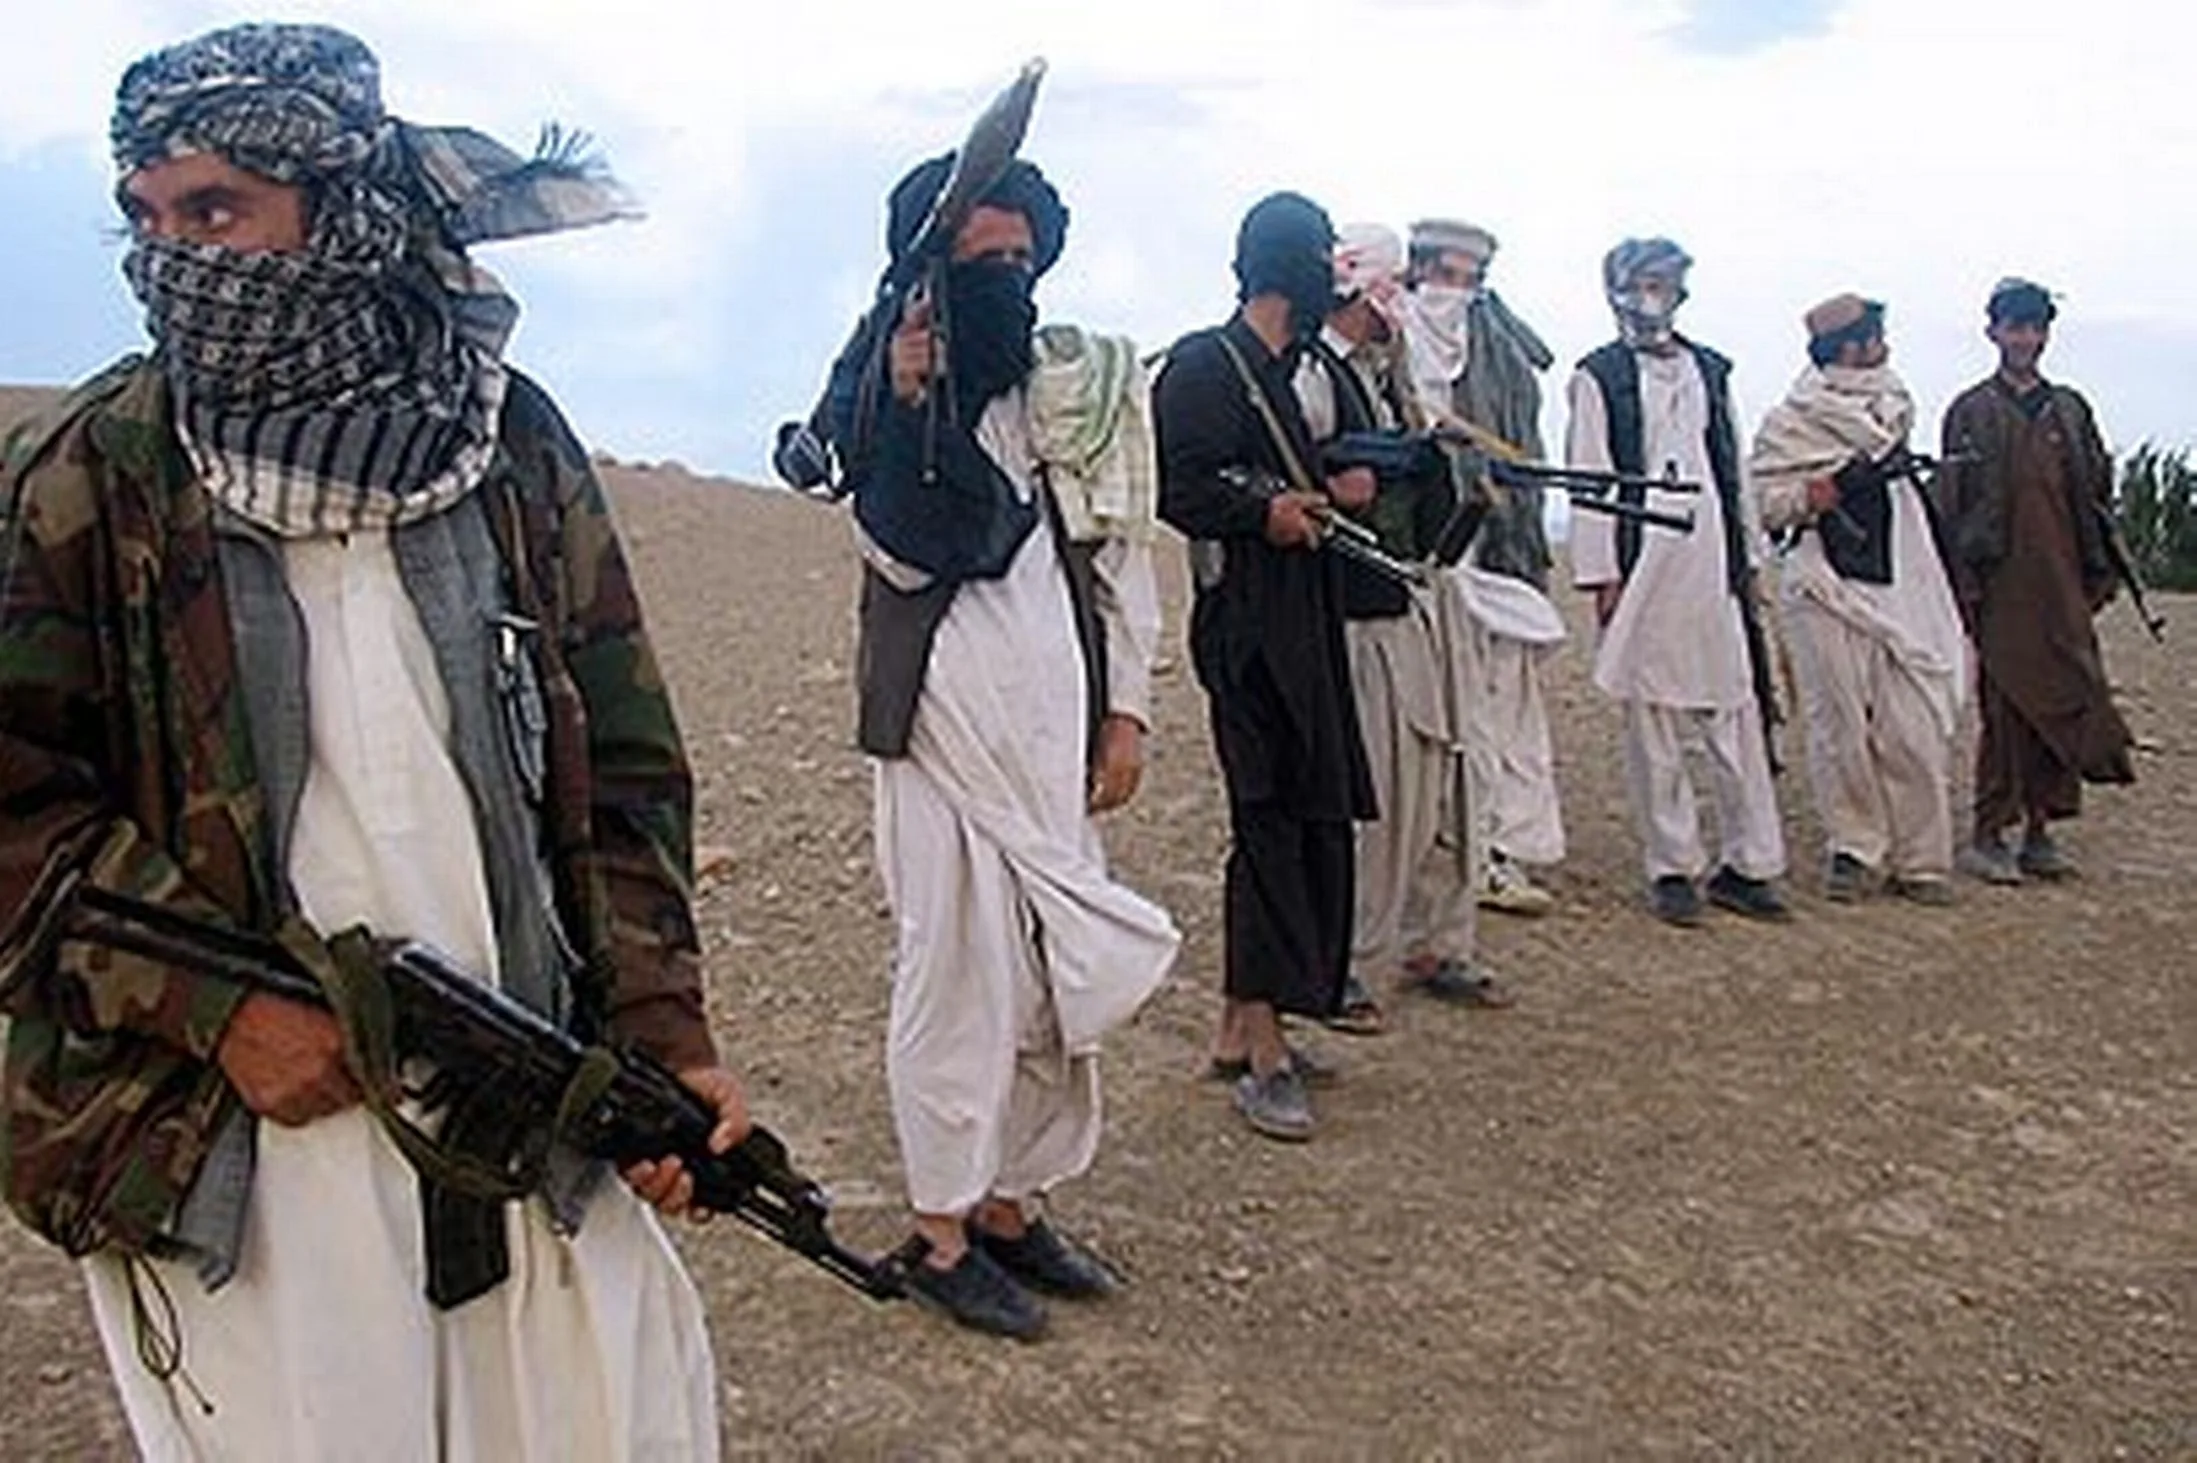 taliban-militia-pic-getty-641490961